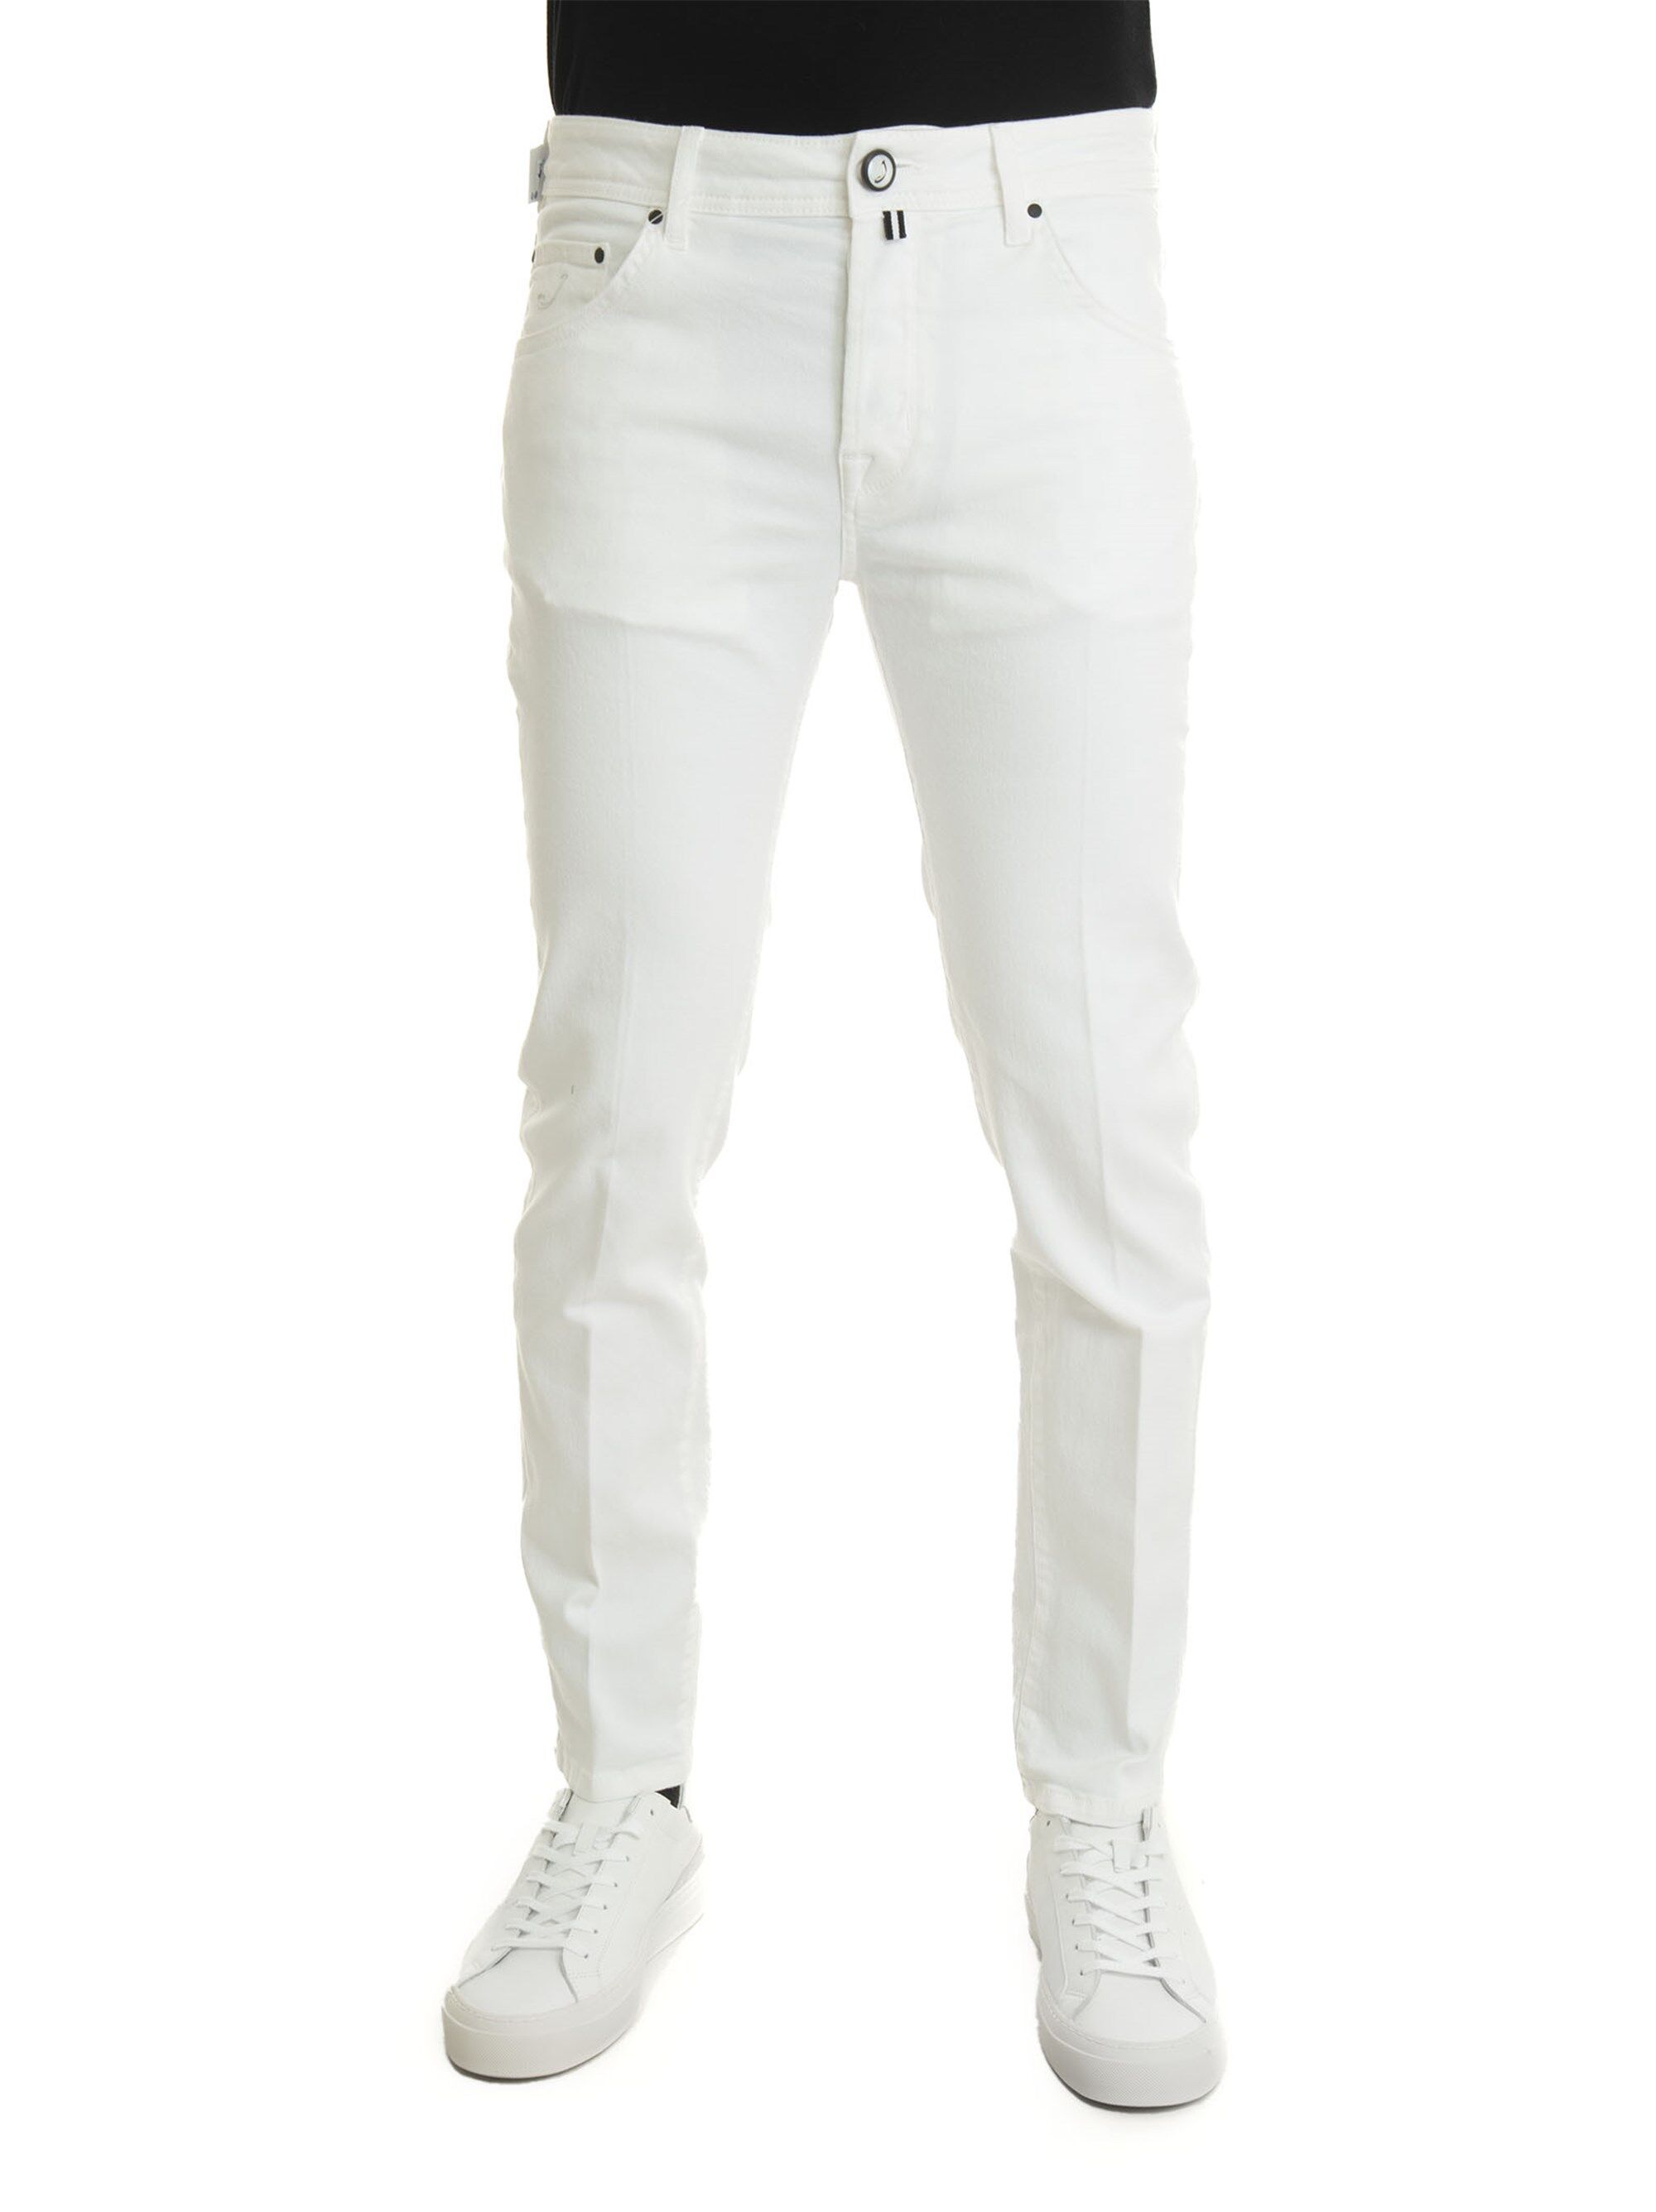 Jacob Cohen x Histores Jeans 5 tasche Denim bianco Uomo 36